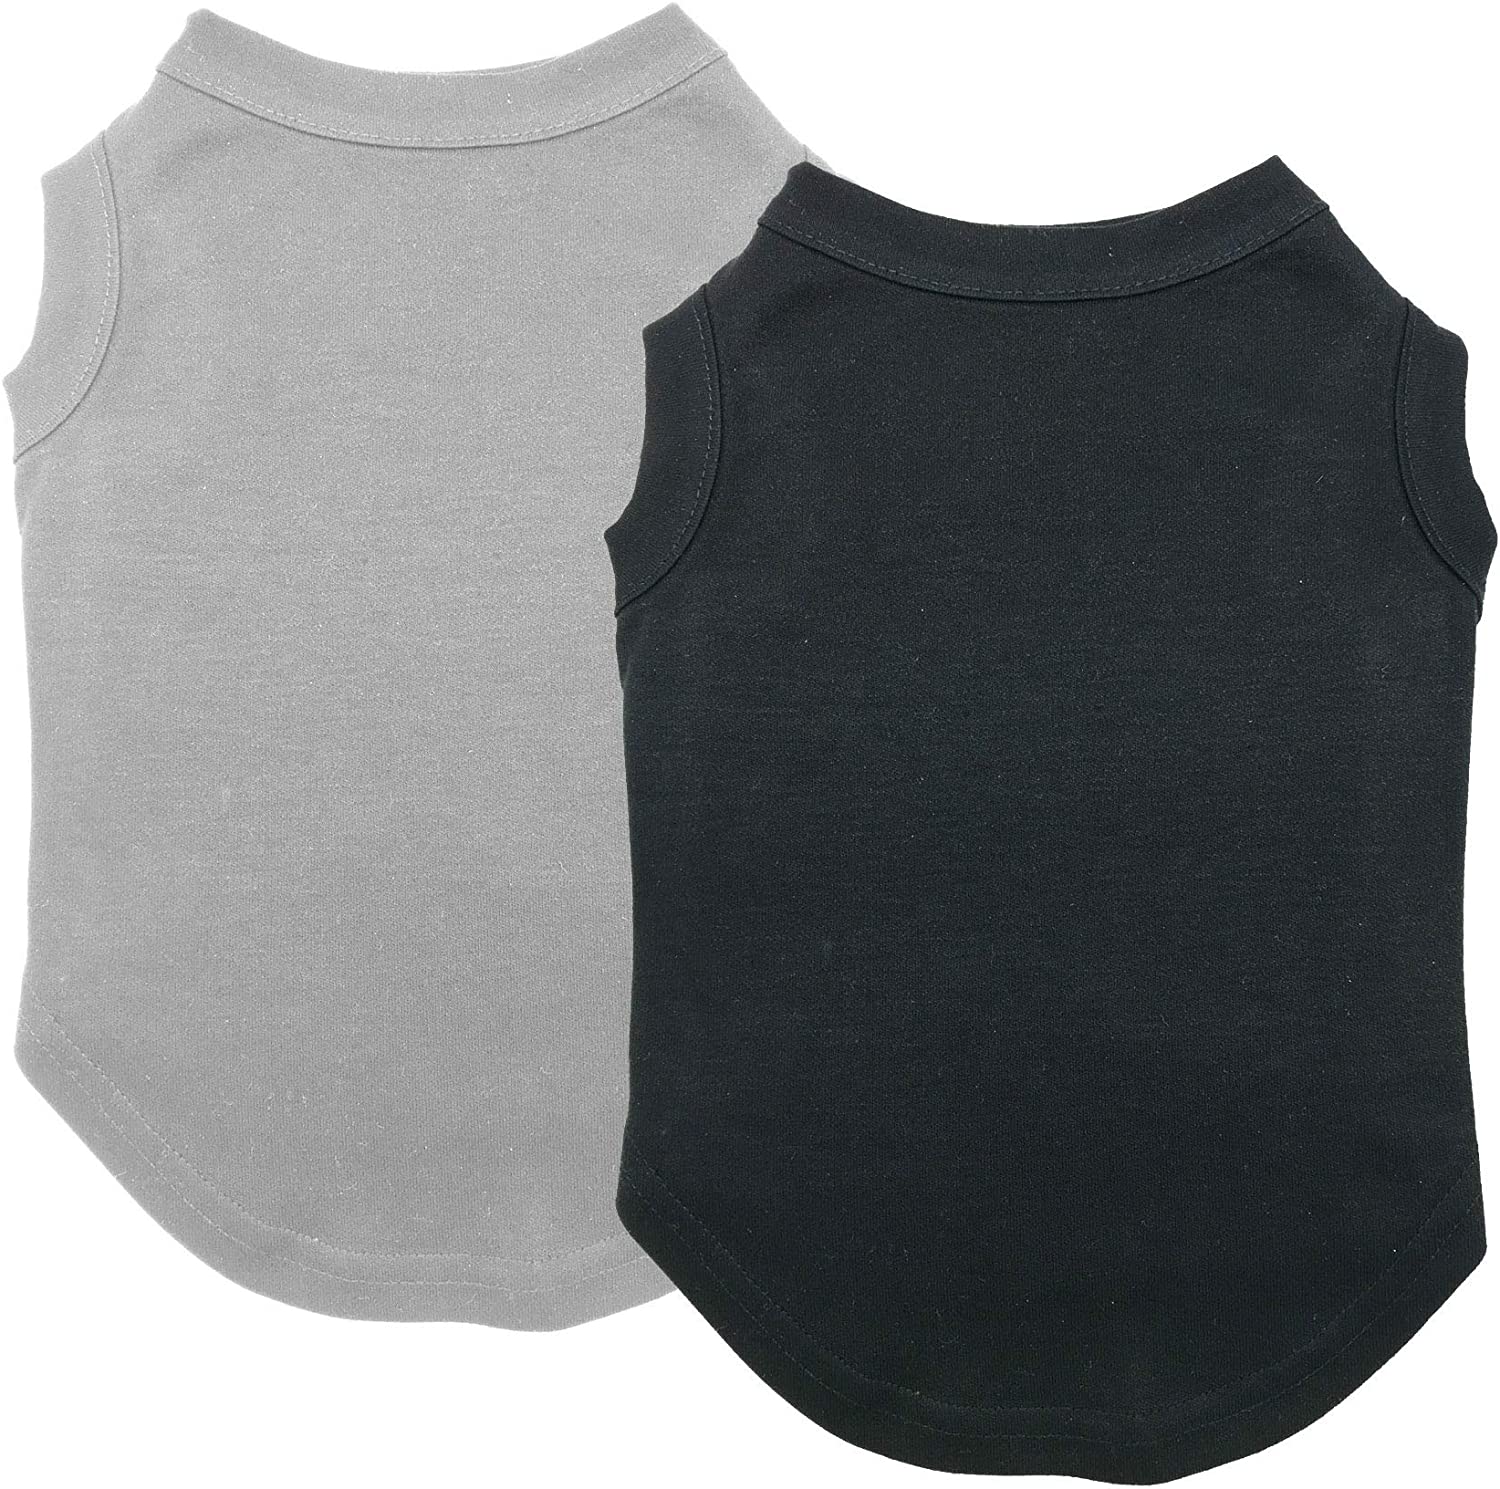 Chol&Vivi Cat T-Shirt Clothes Soft and Thin, 2pcs